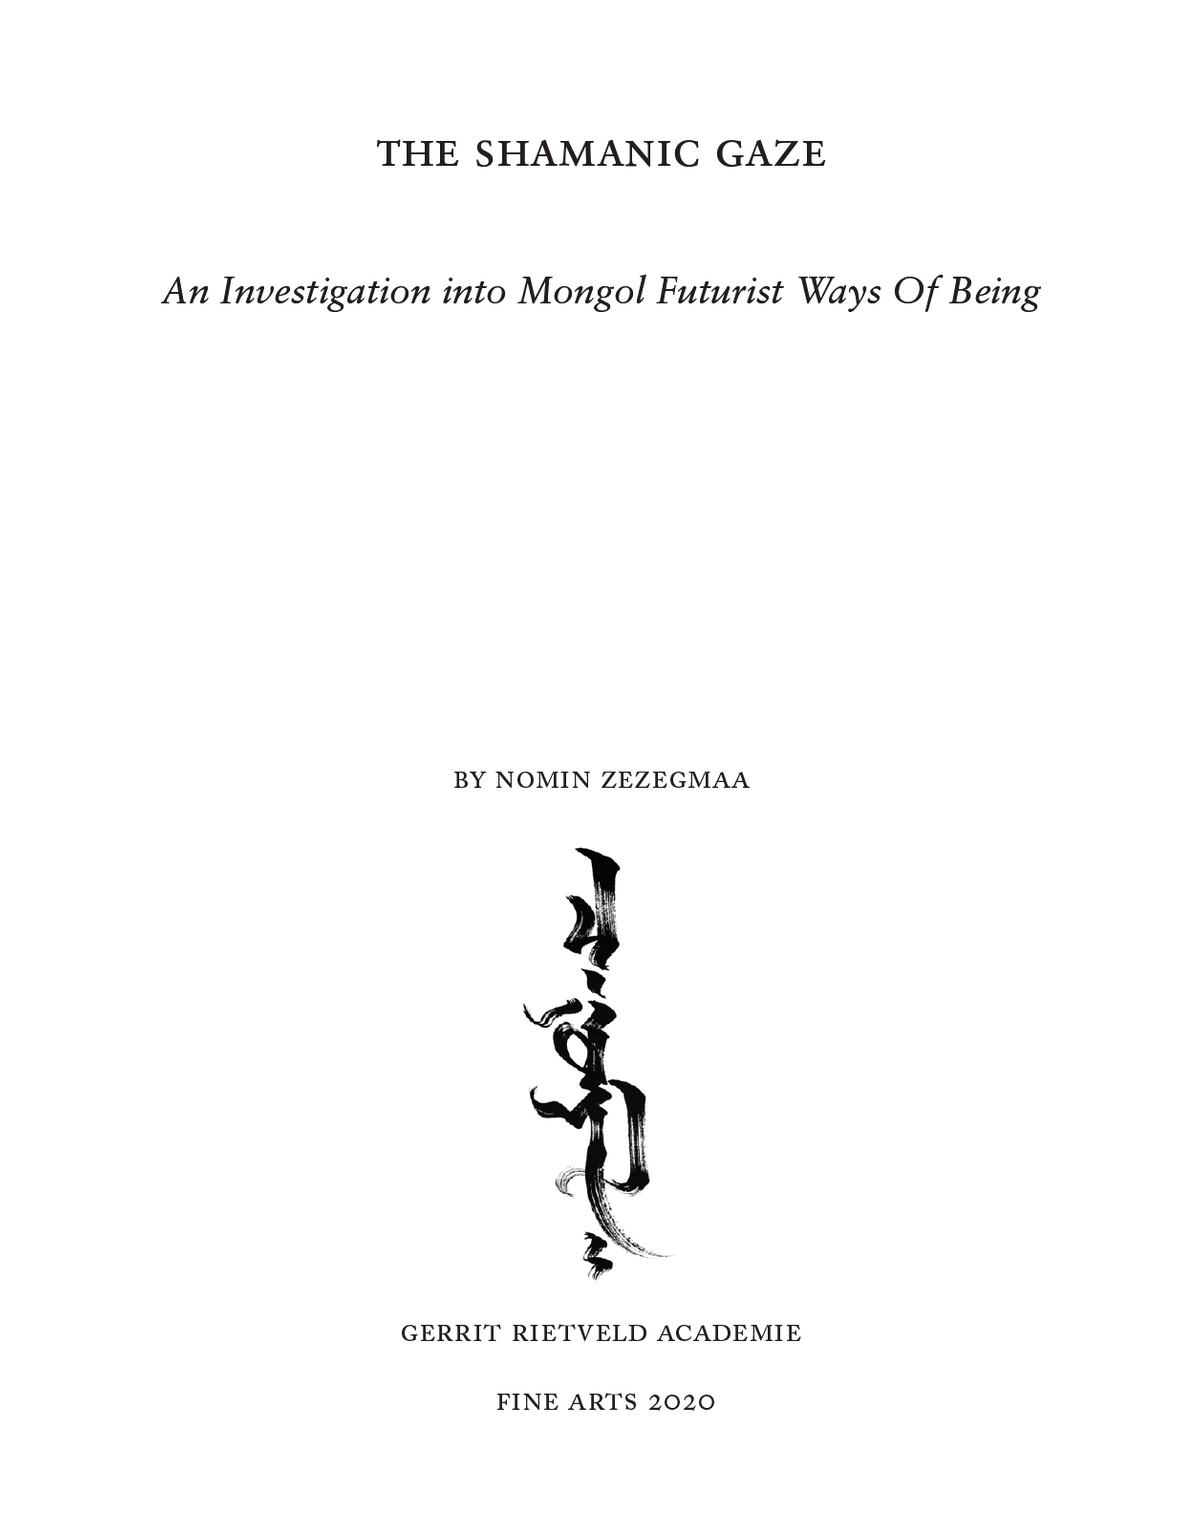 mongol shamanism symbol